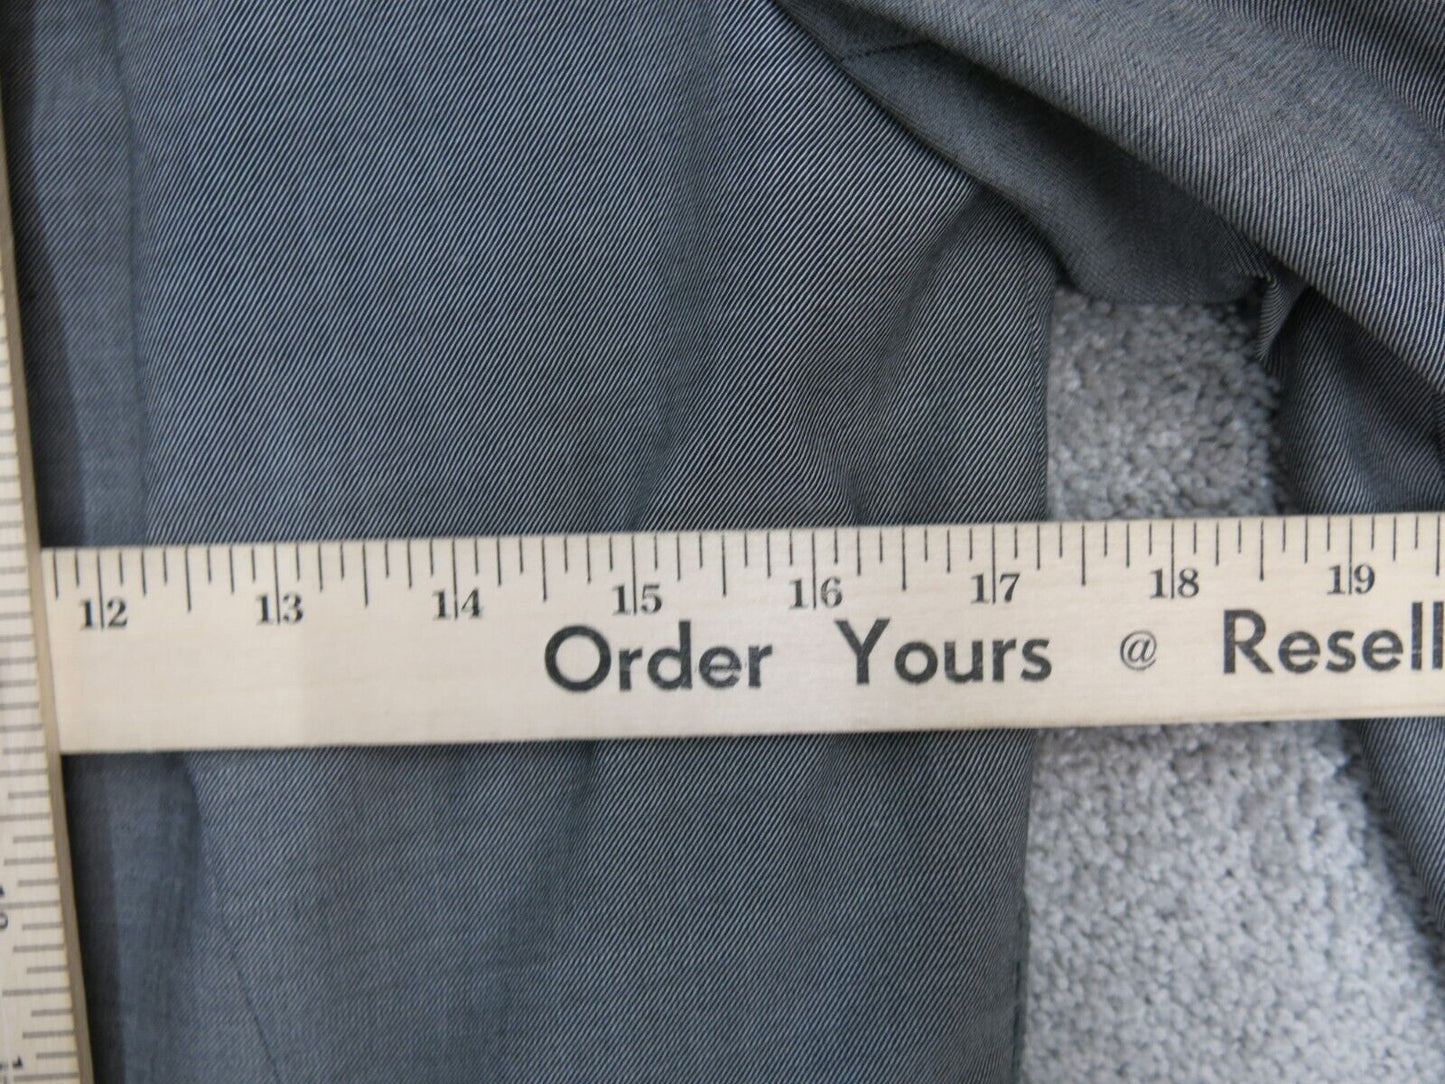 Tahari Mens Blazer Coat Jacket Front Button Long Sleeve Heather Gray Size 8P